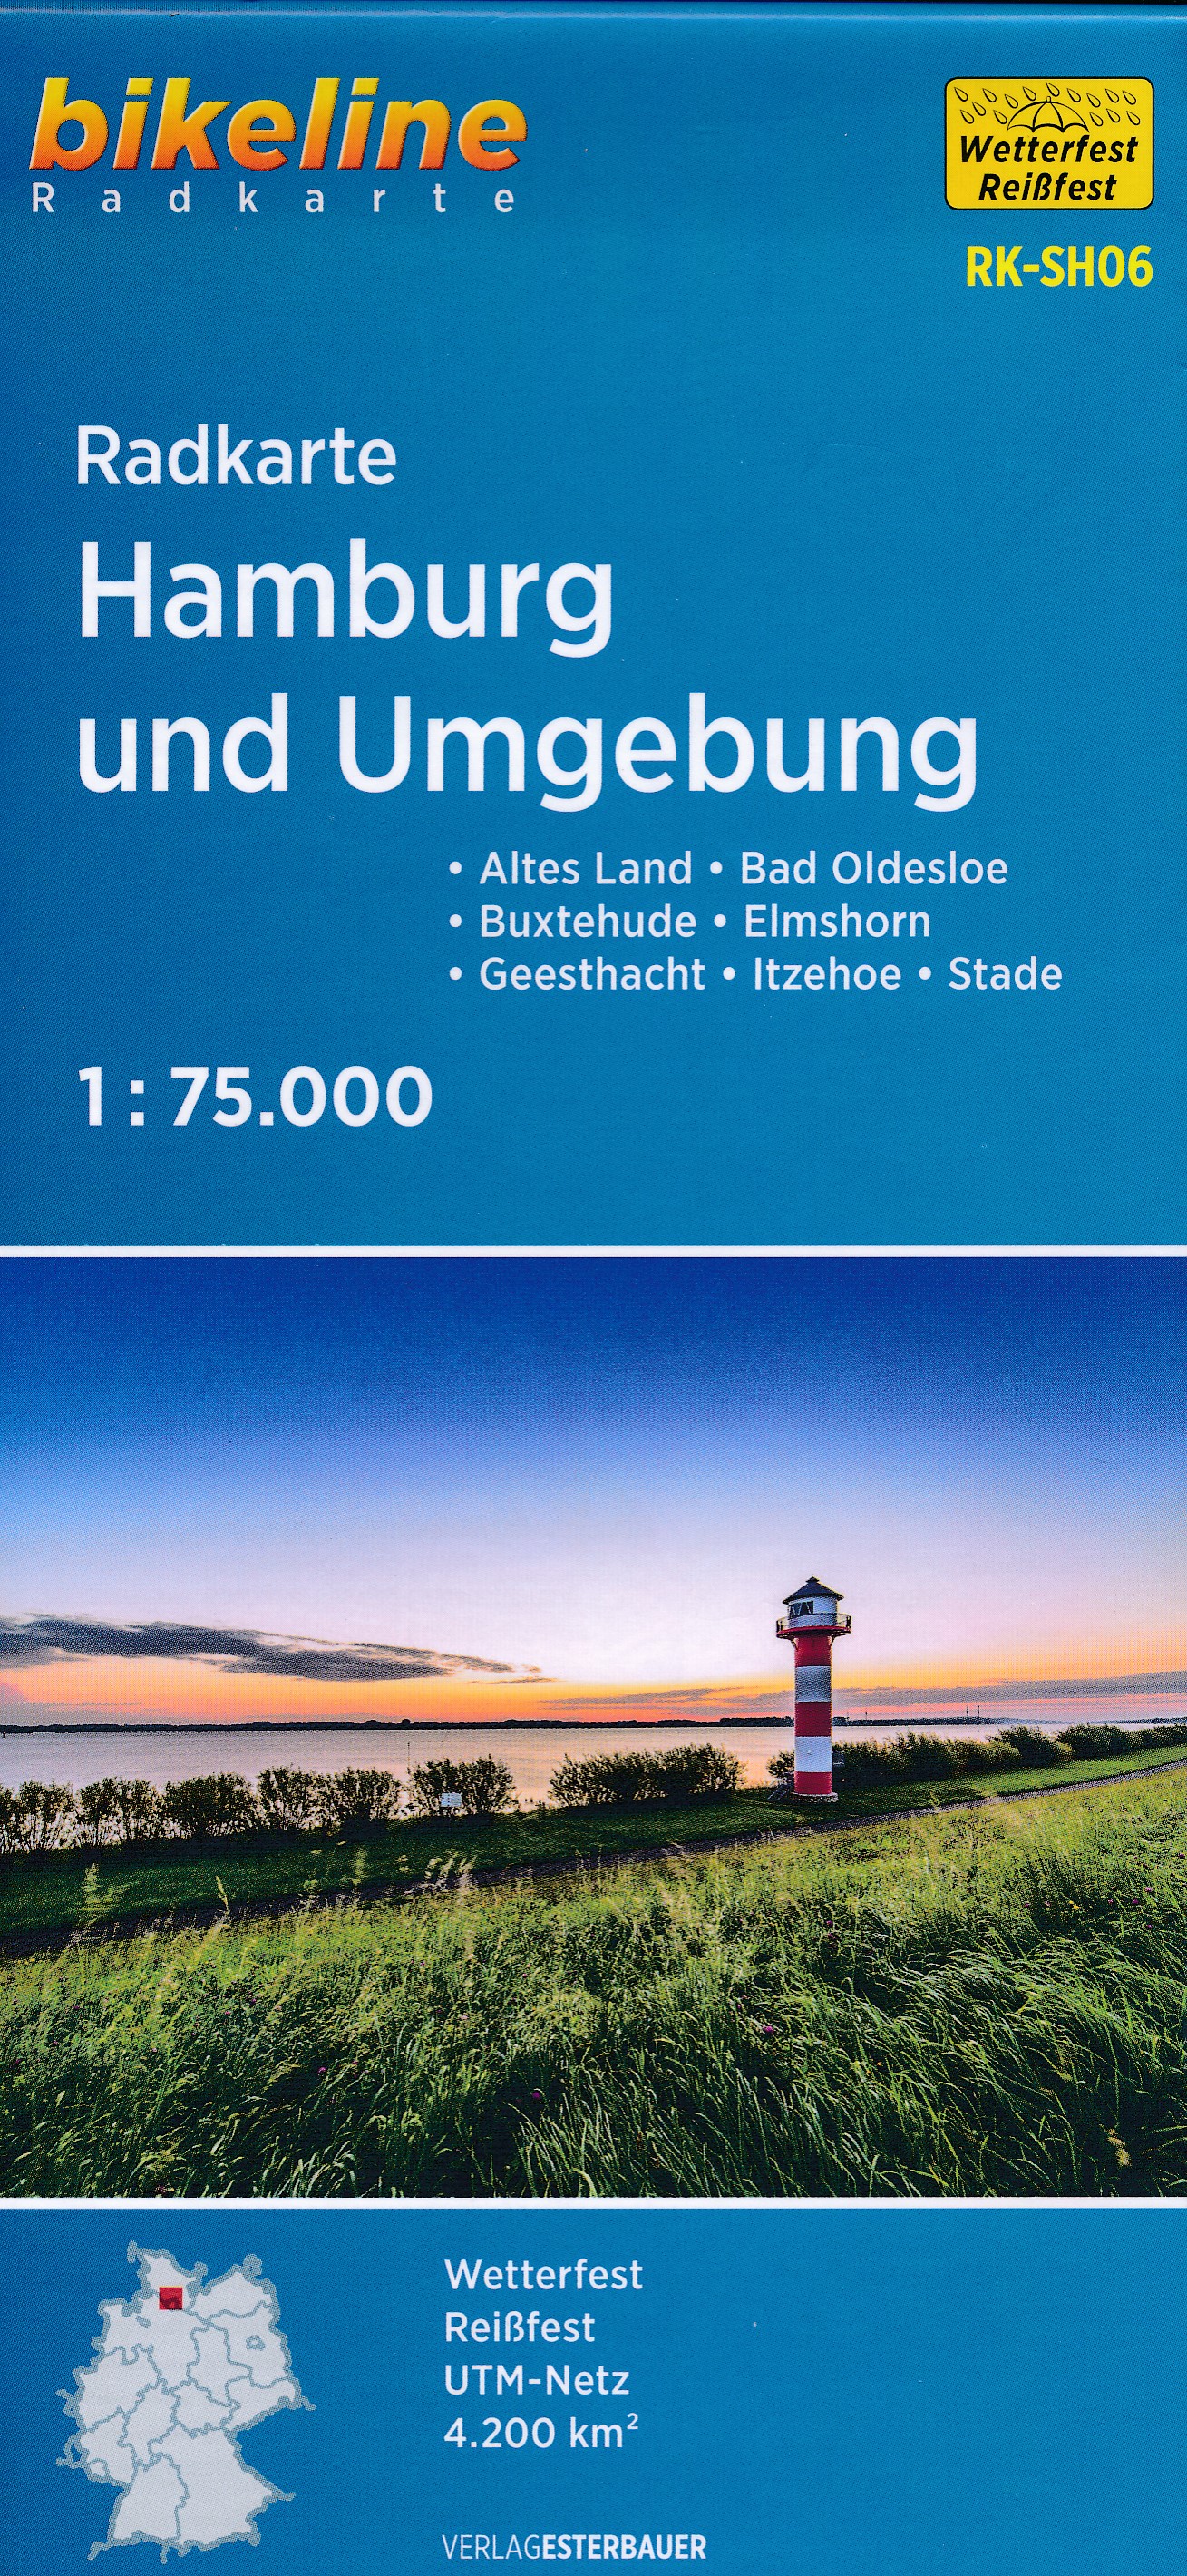 Online bestellen: Fietskaart SH06 Bikeline Radkarte Hamburg und umgebung | Esterbauer